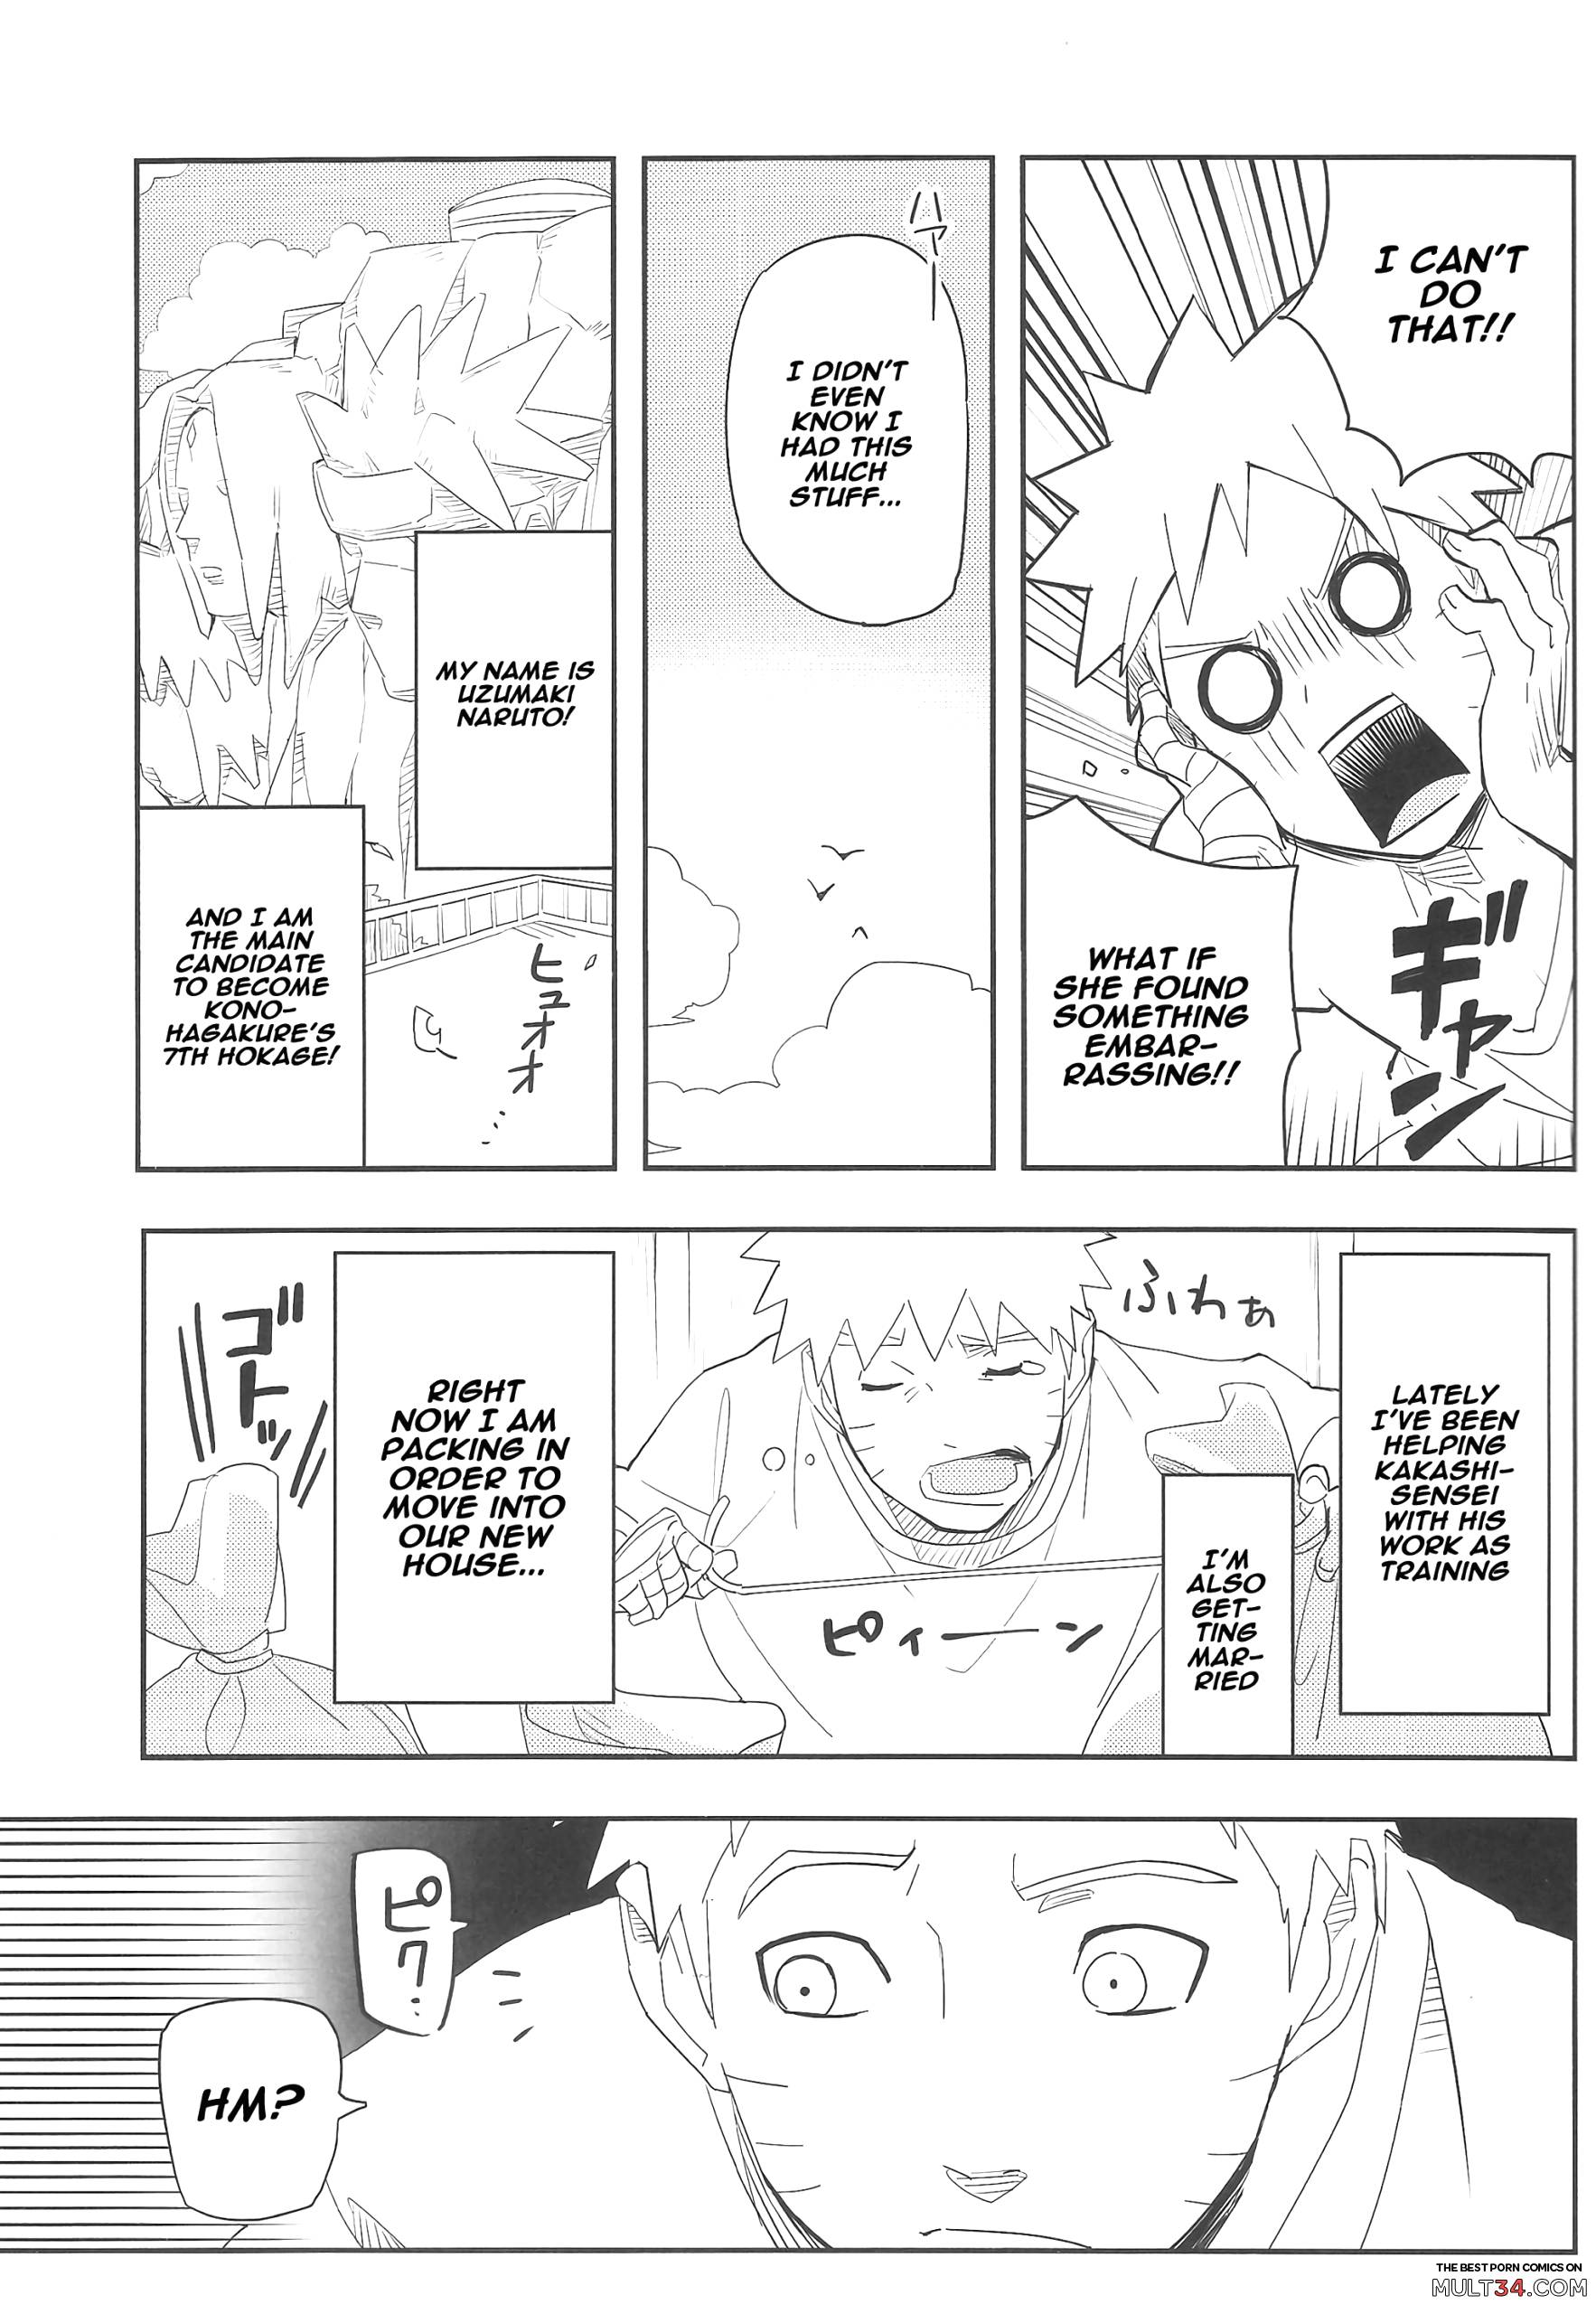 Kage Bunshin - tte Shitteru! page 4